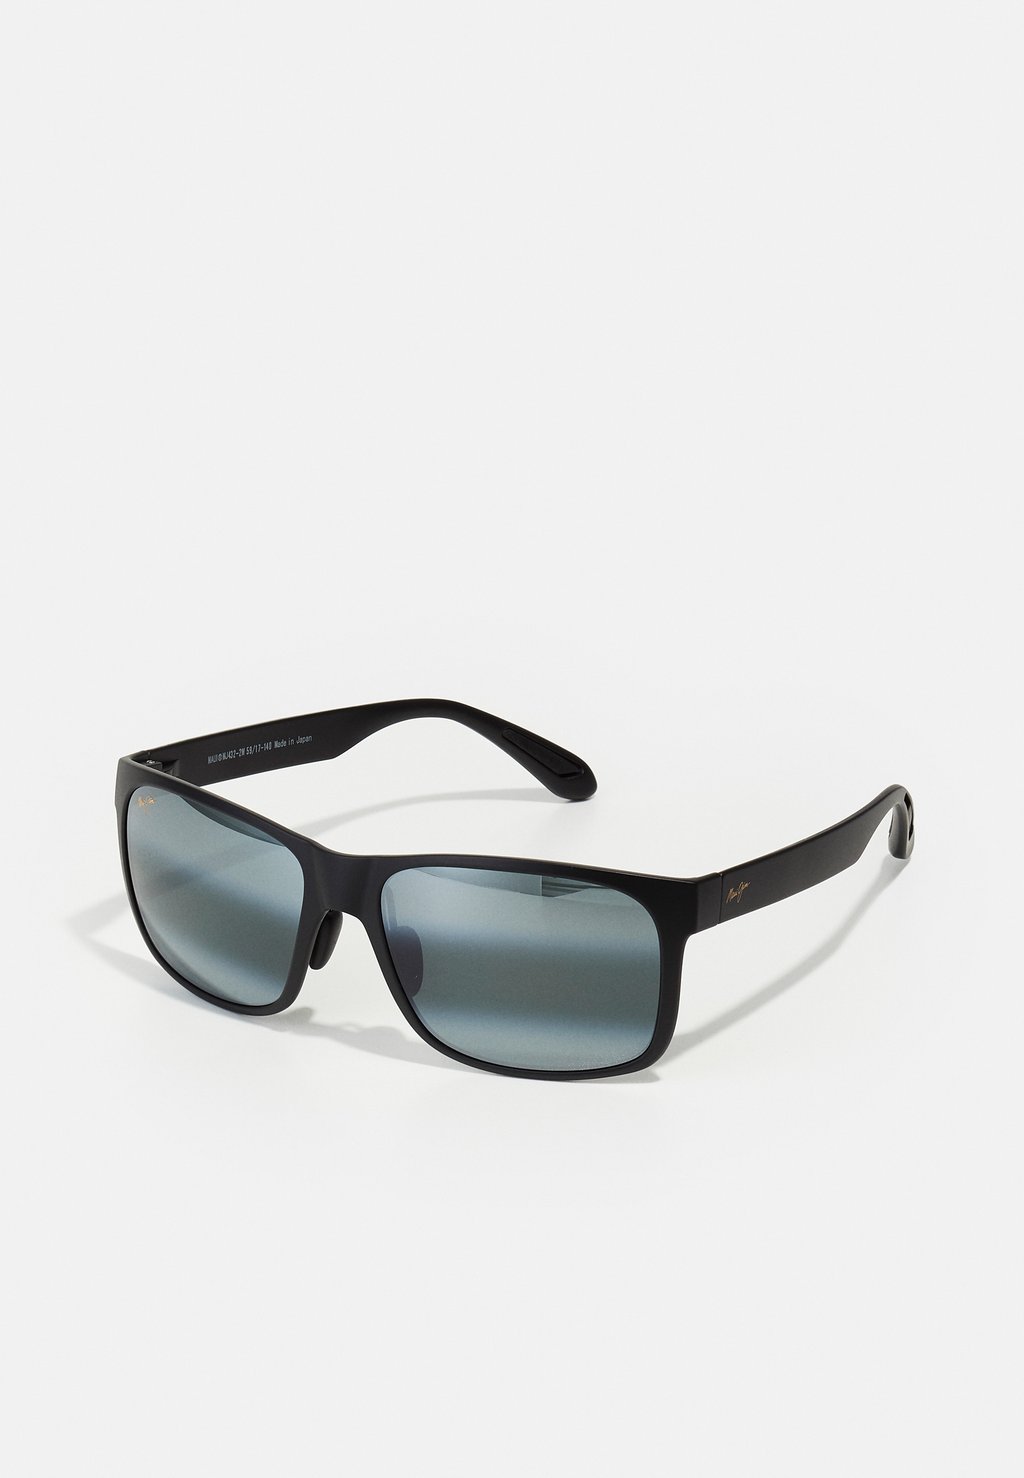 Солнцезащитные очки UNISEX Maui Jim, цвет matte black солнцезащитные очки kanaio coast maui jim цвет matte soft black white blue